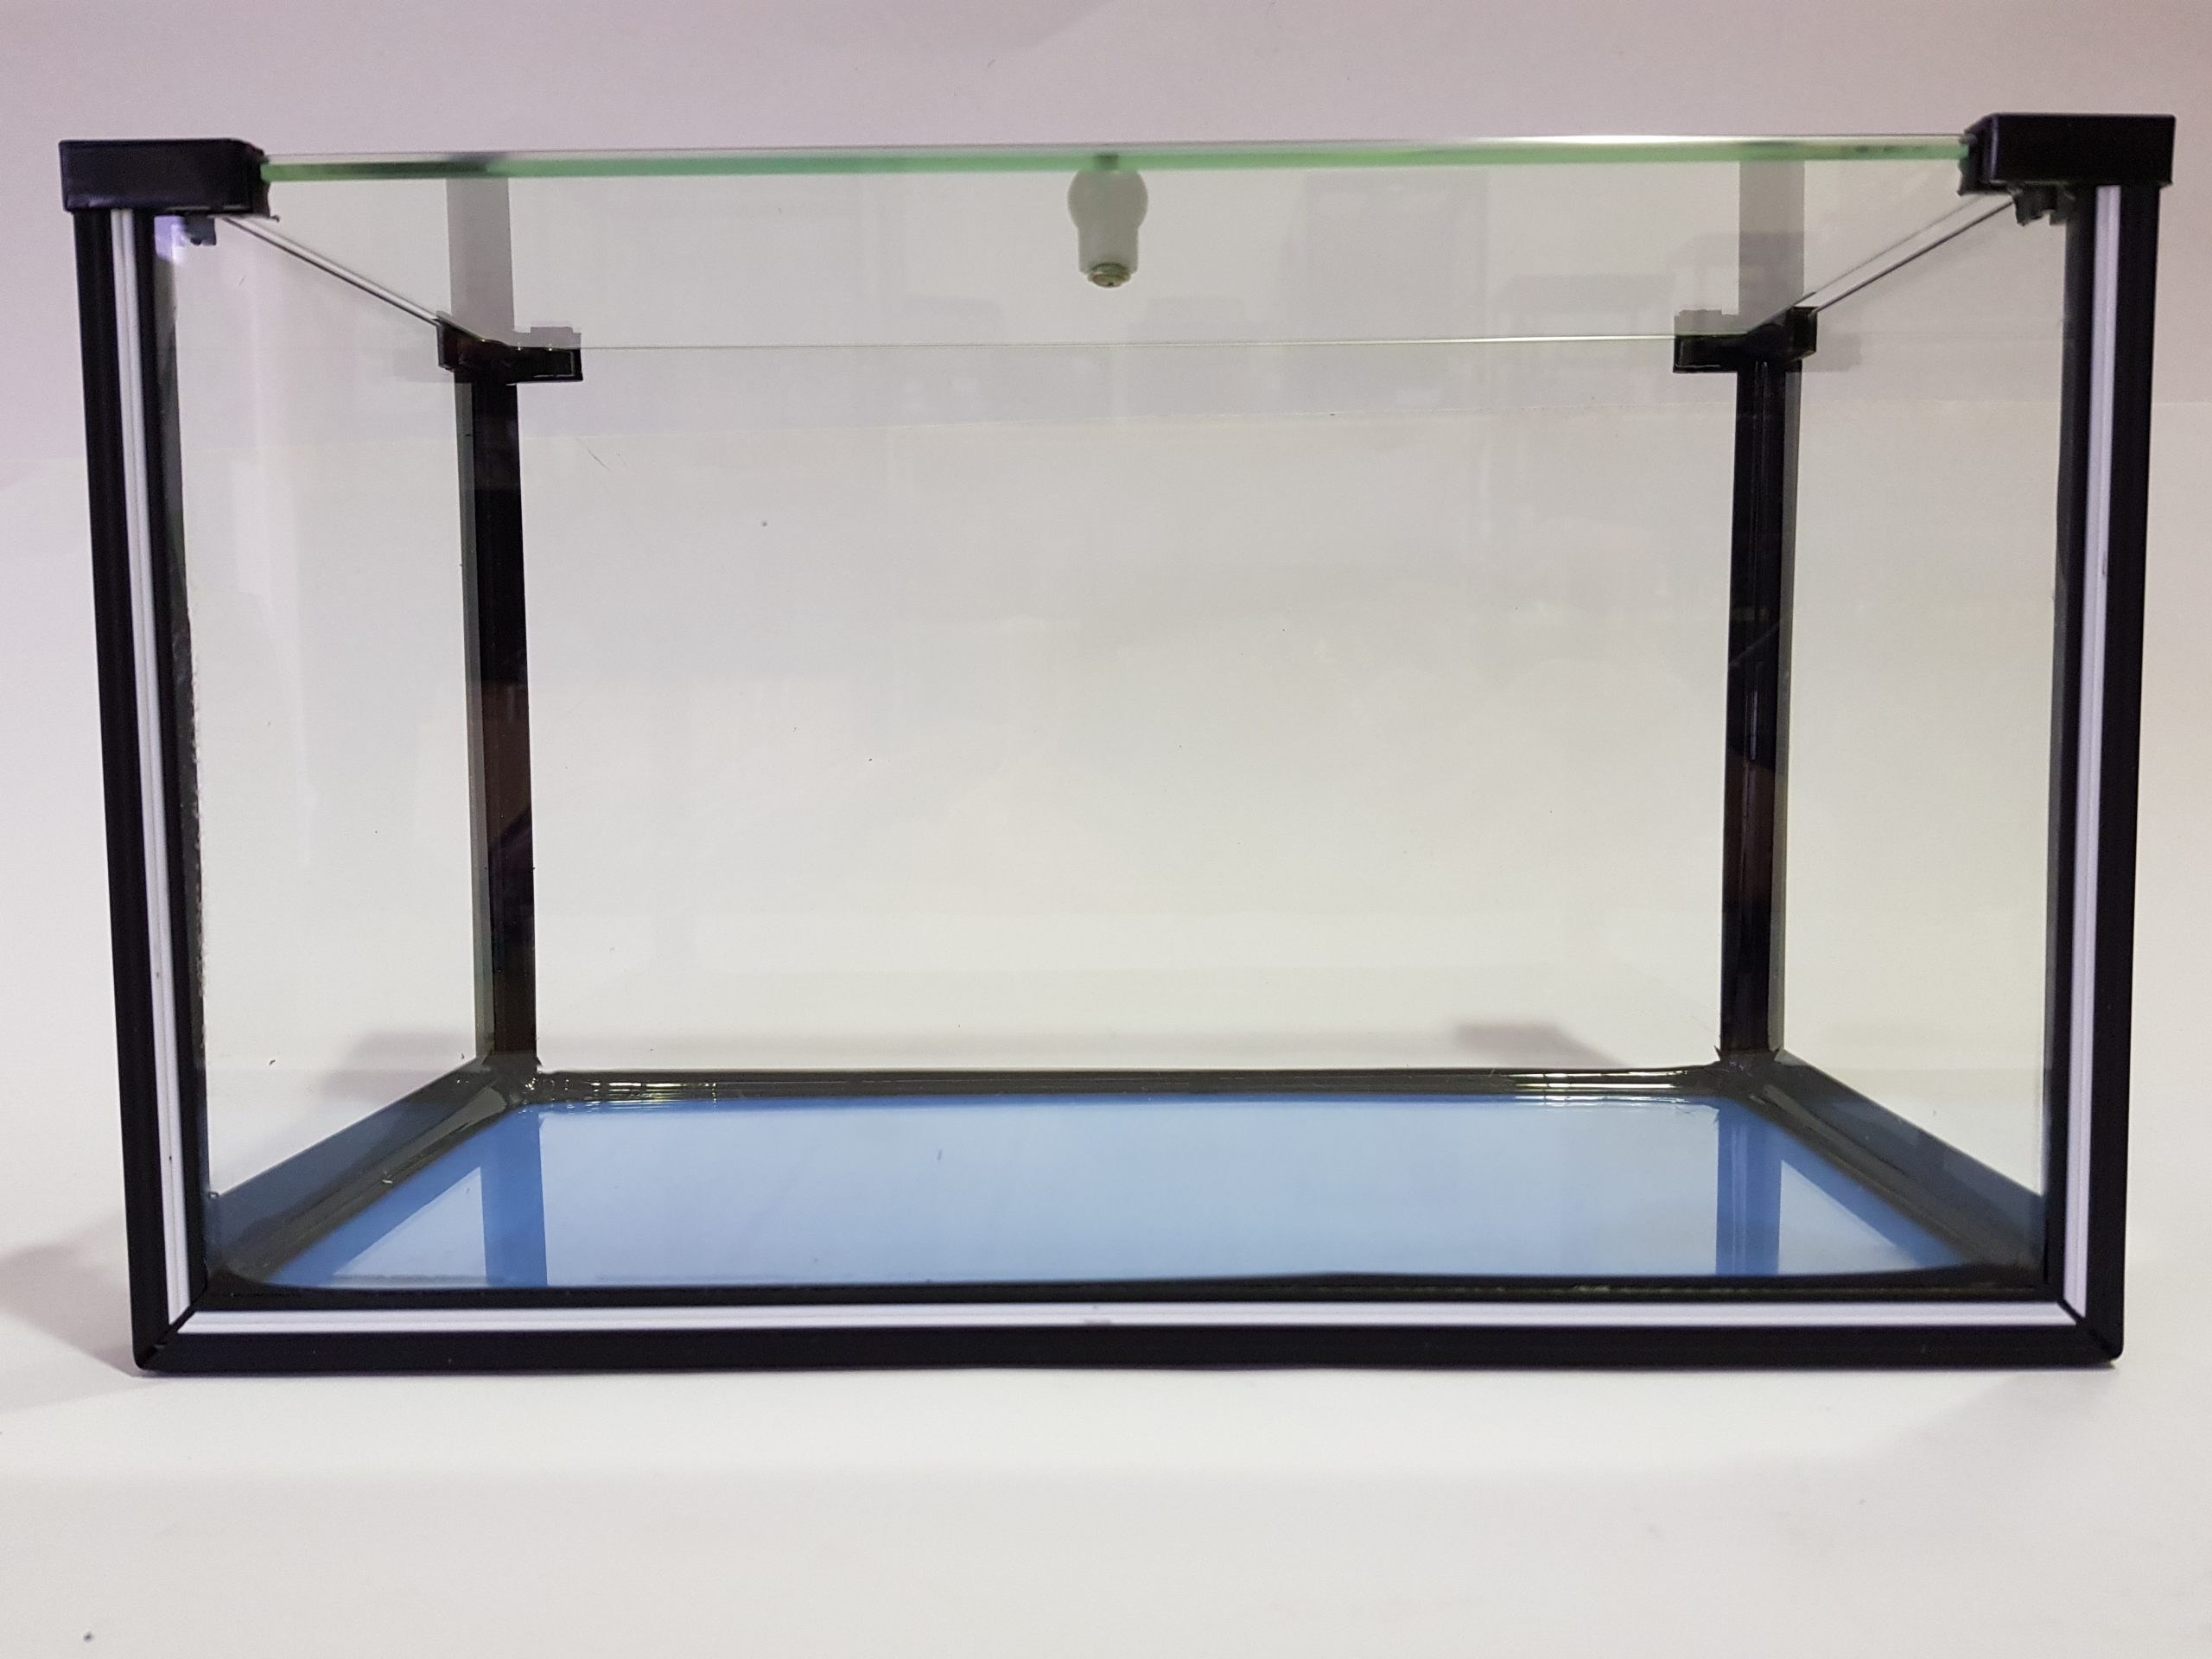  2 7L Fish Tank with Glass Lid 30x15x18cm Family Pet 